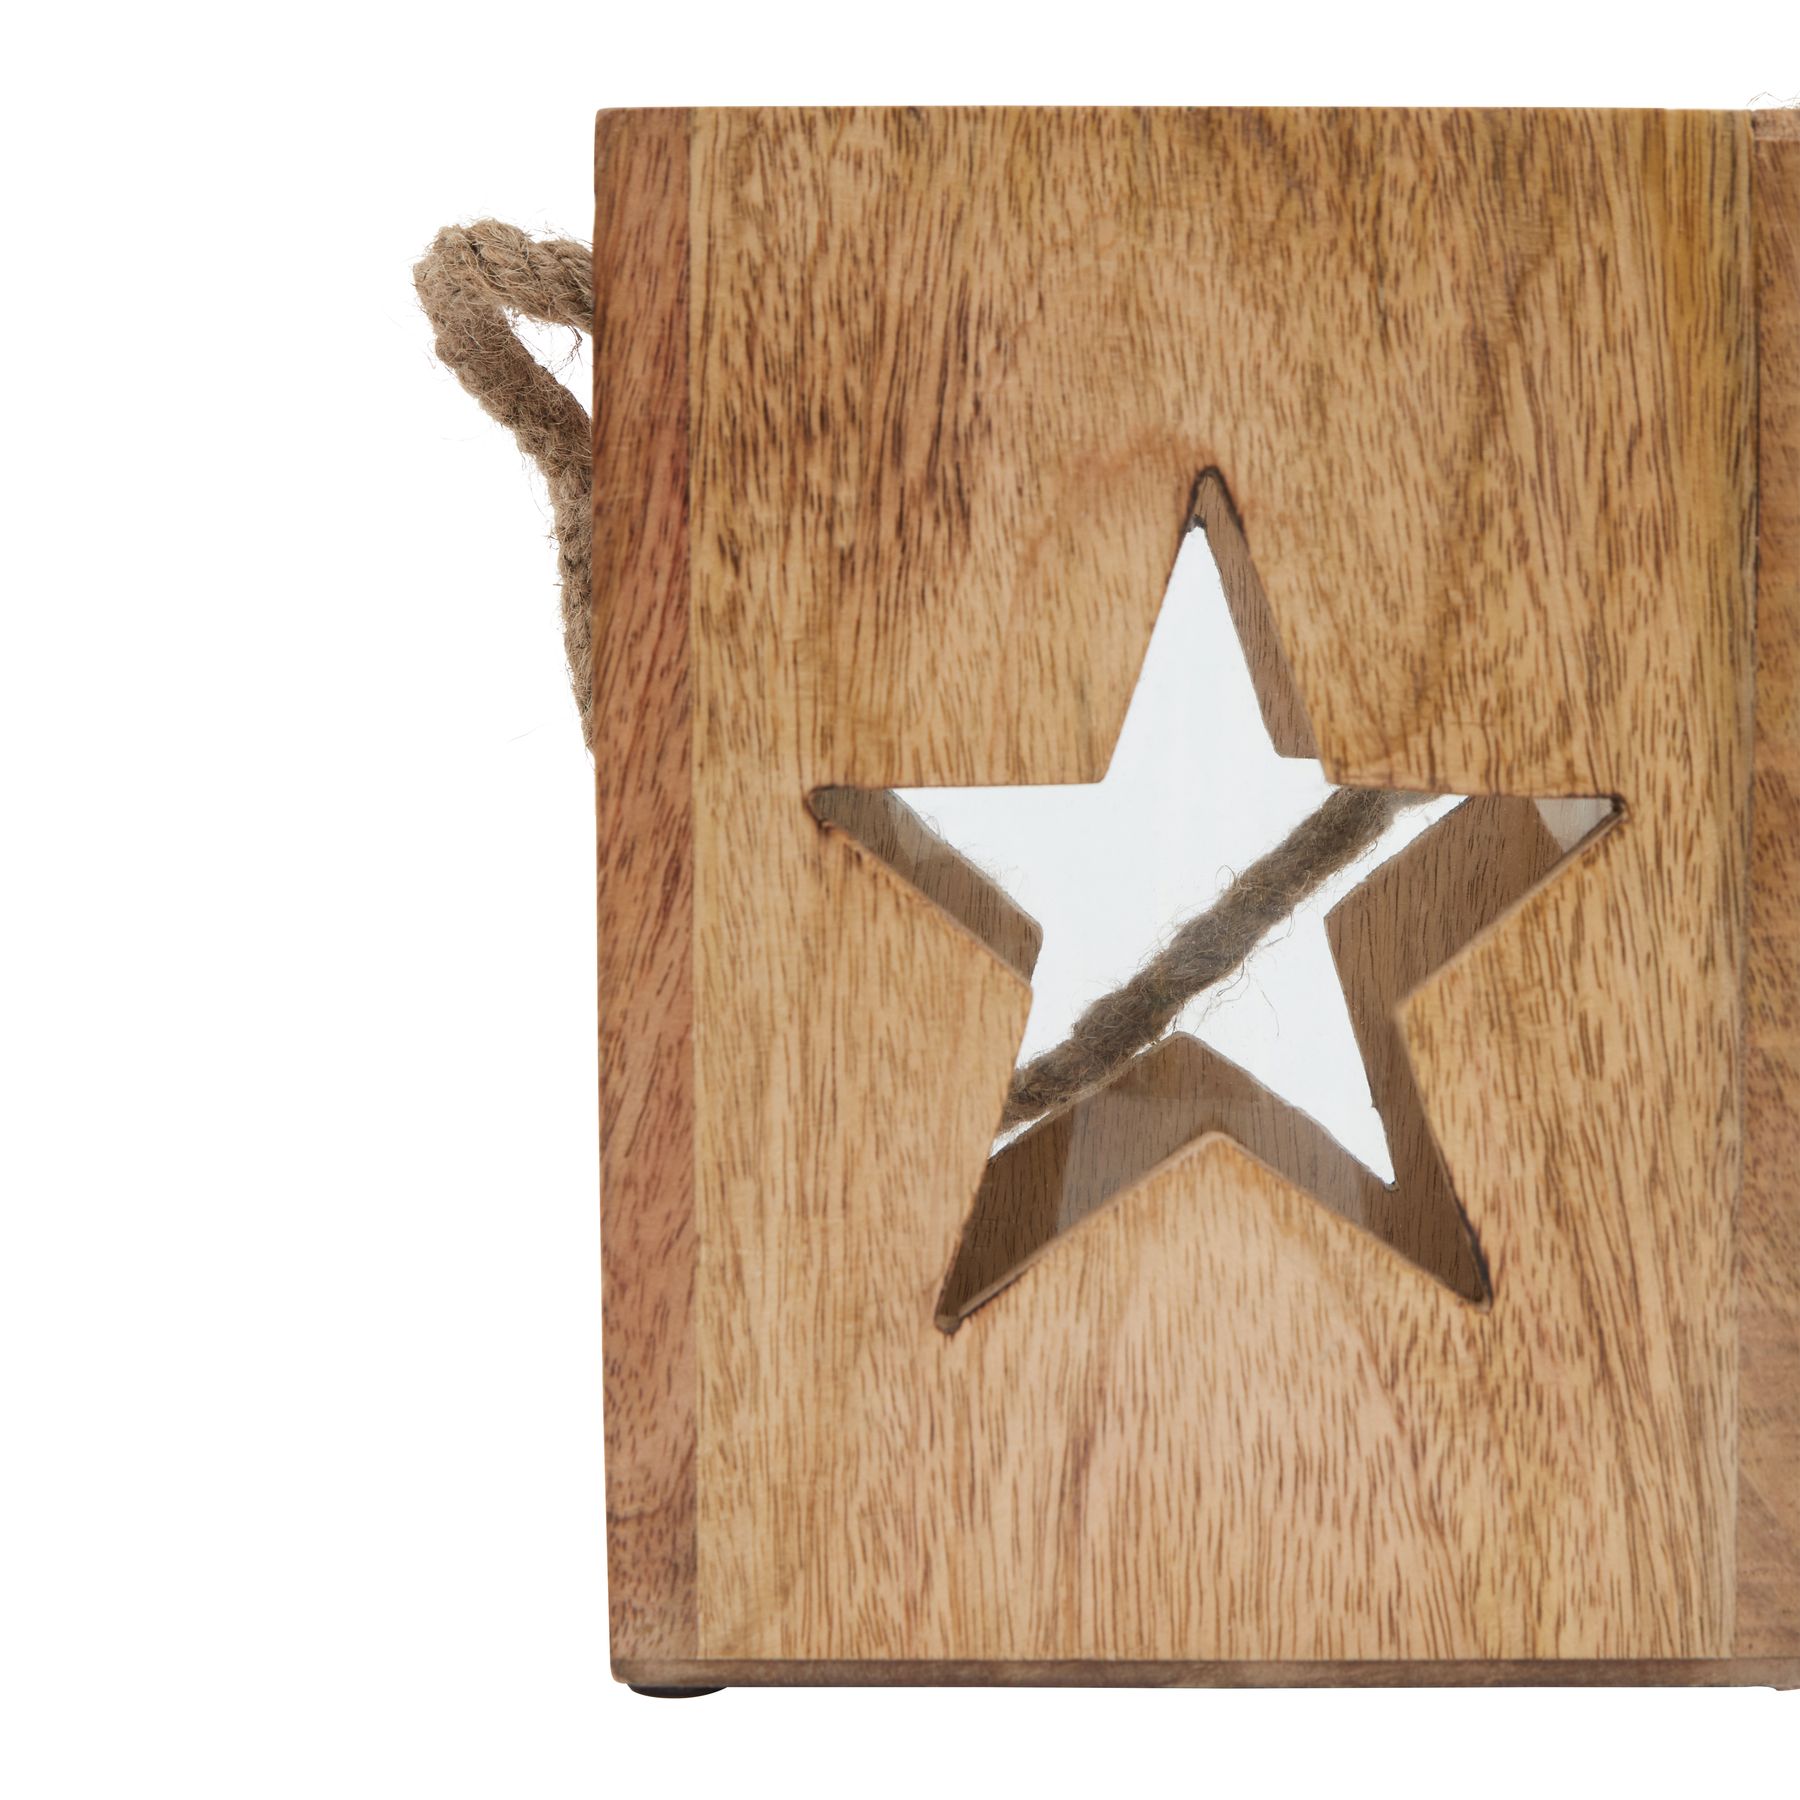 Natural Wooden Large Star Tealight Candle Holder - Image 3